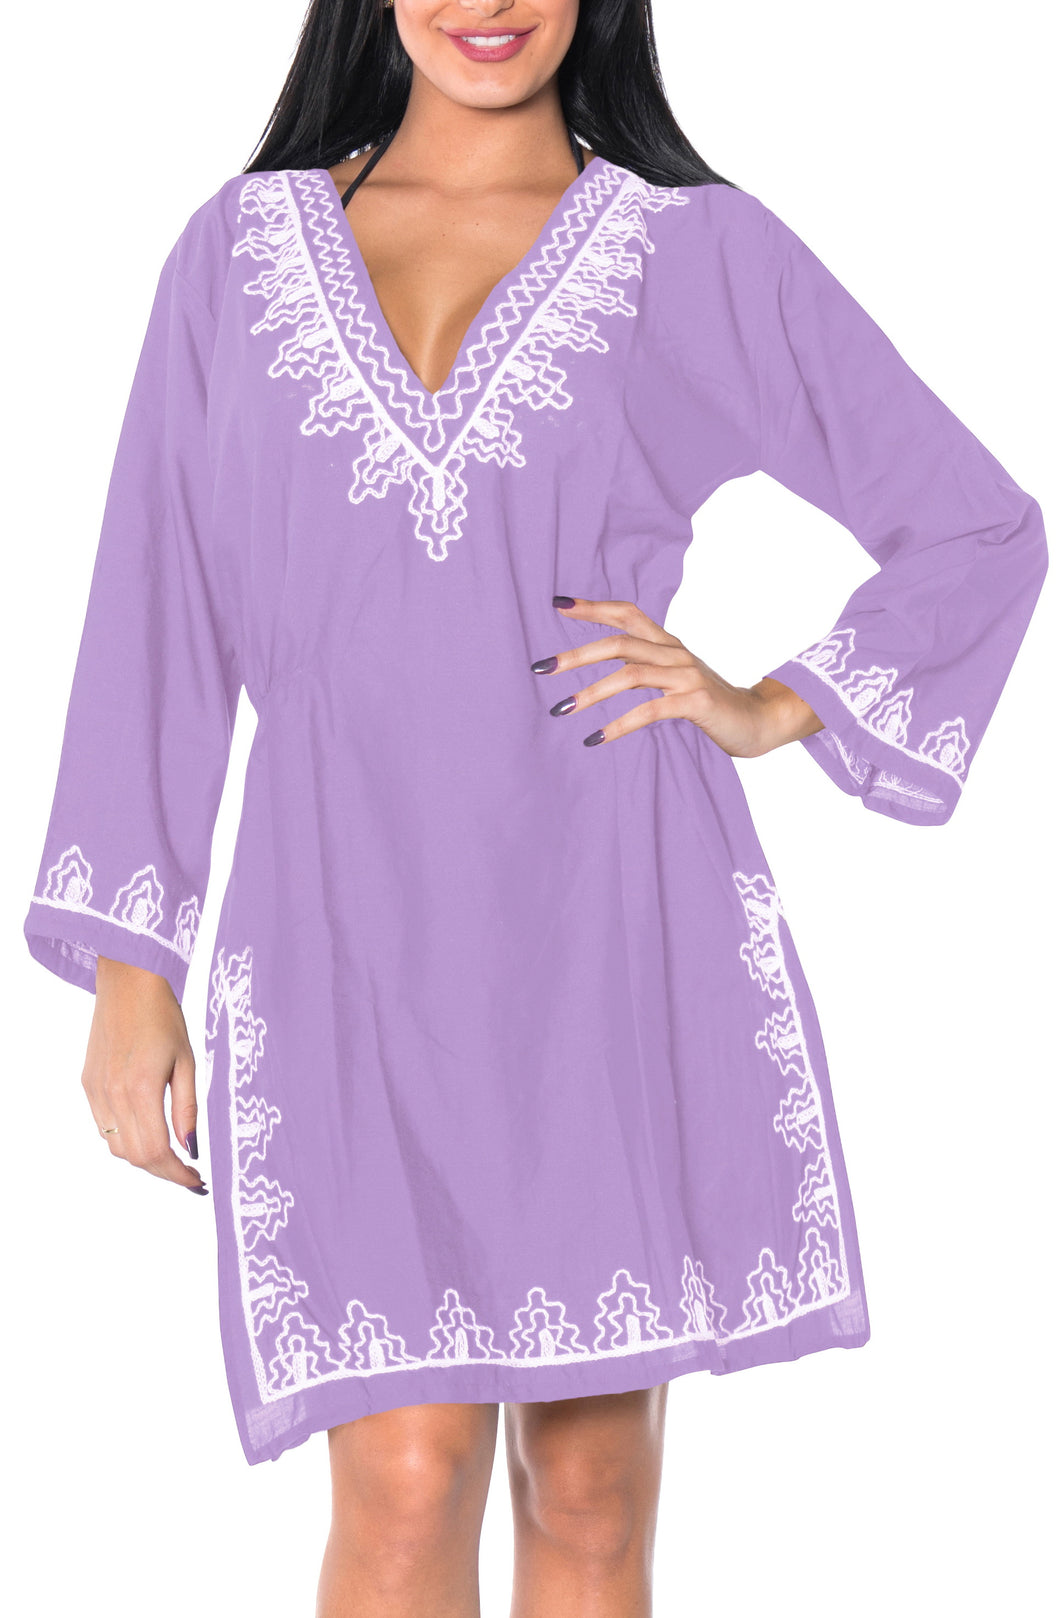 La Leela Embroidered RAYON SWIMSUIT Beach Cover up Tunic Bikini Dress Purple